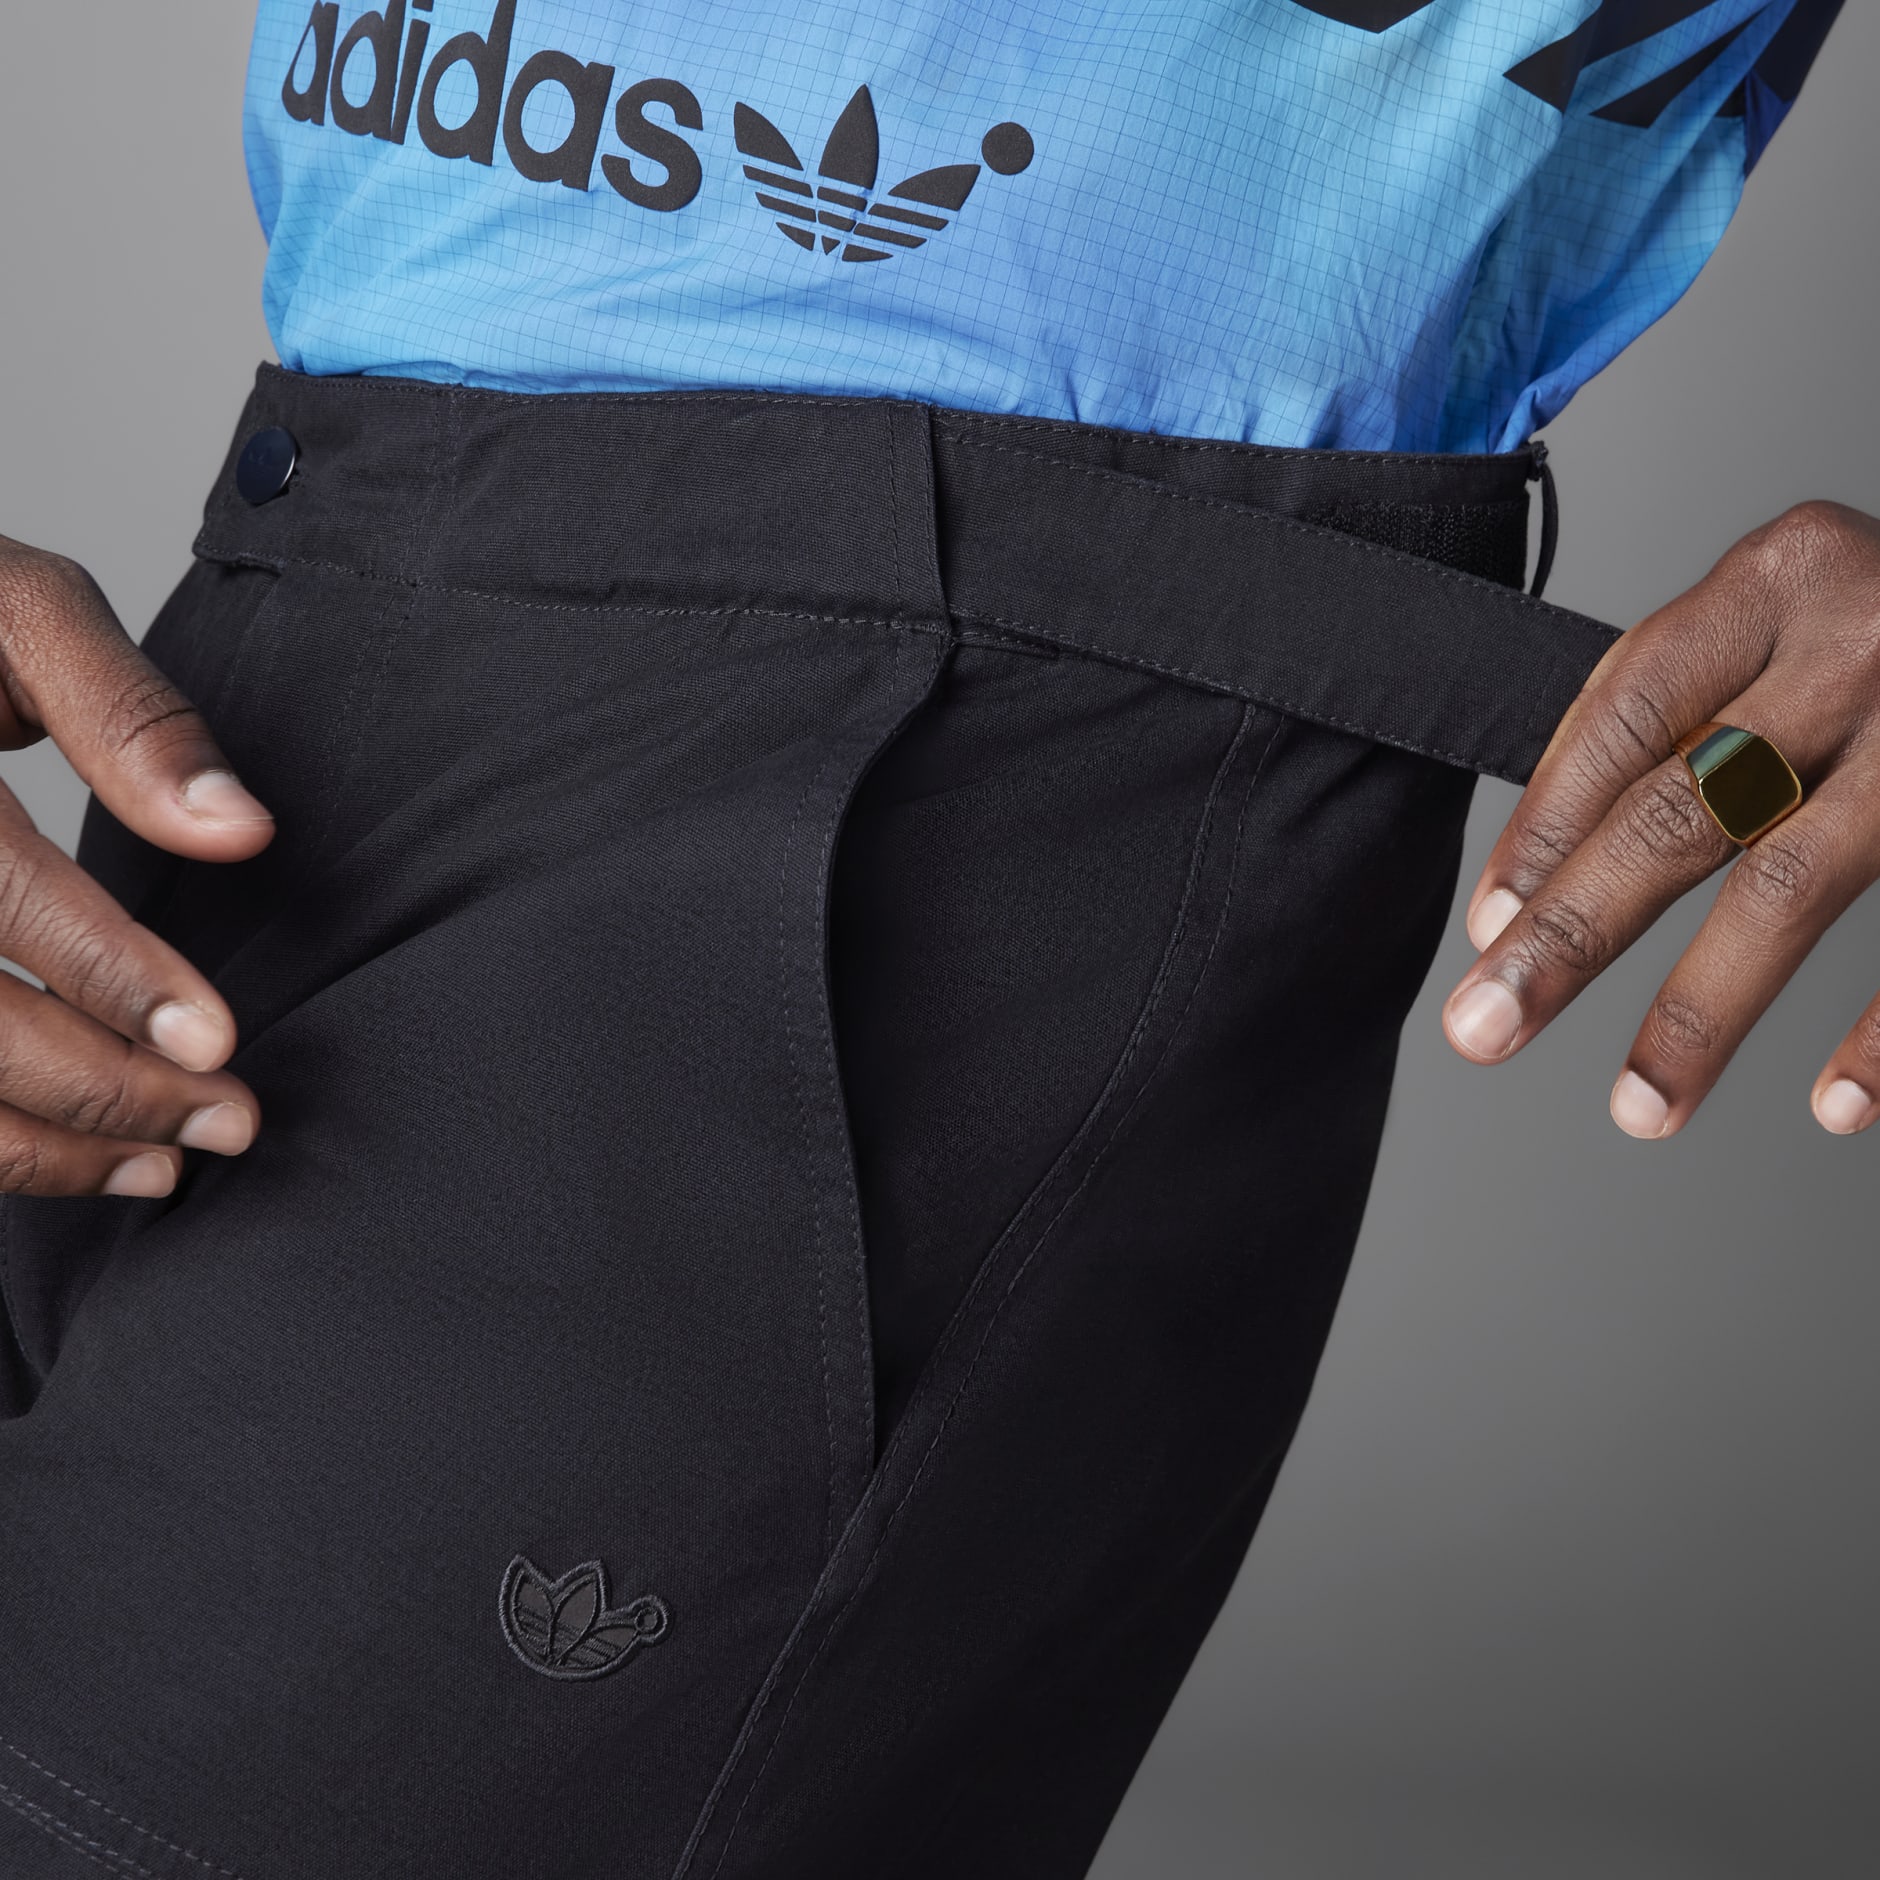 tradesports.co.uk Adidas Men's Blue Version Cargo Pants HD4805